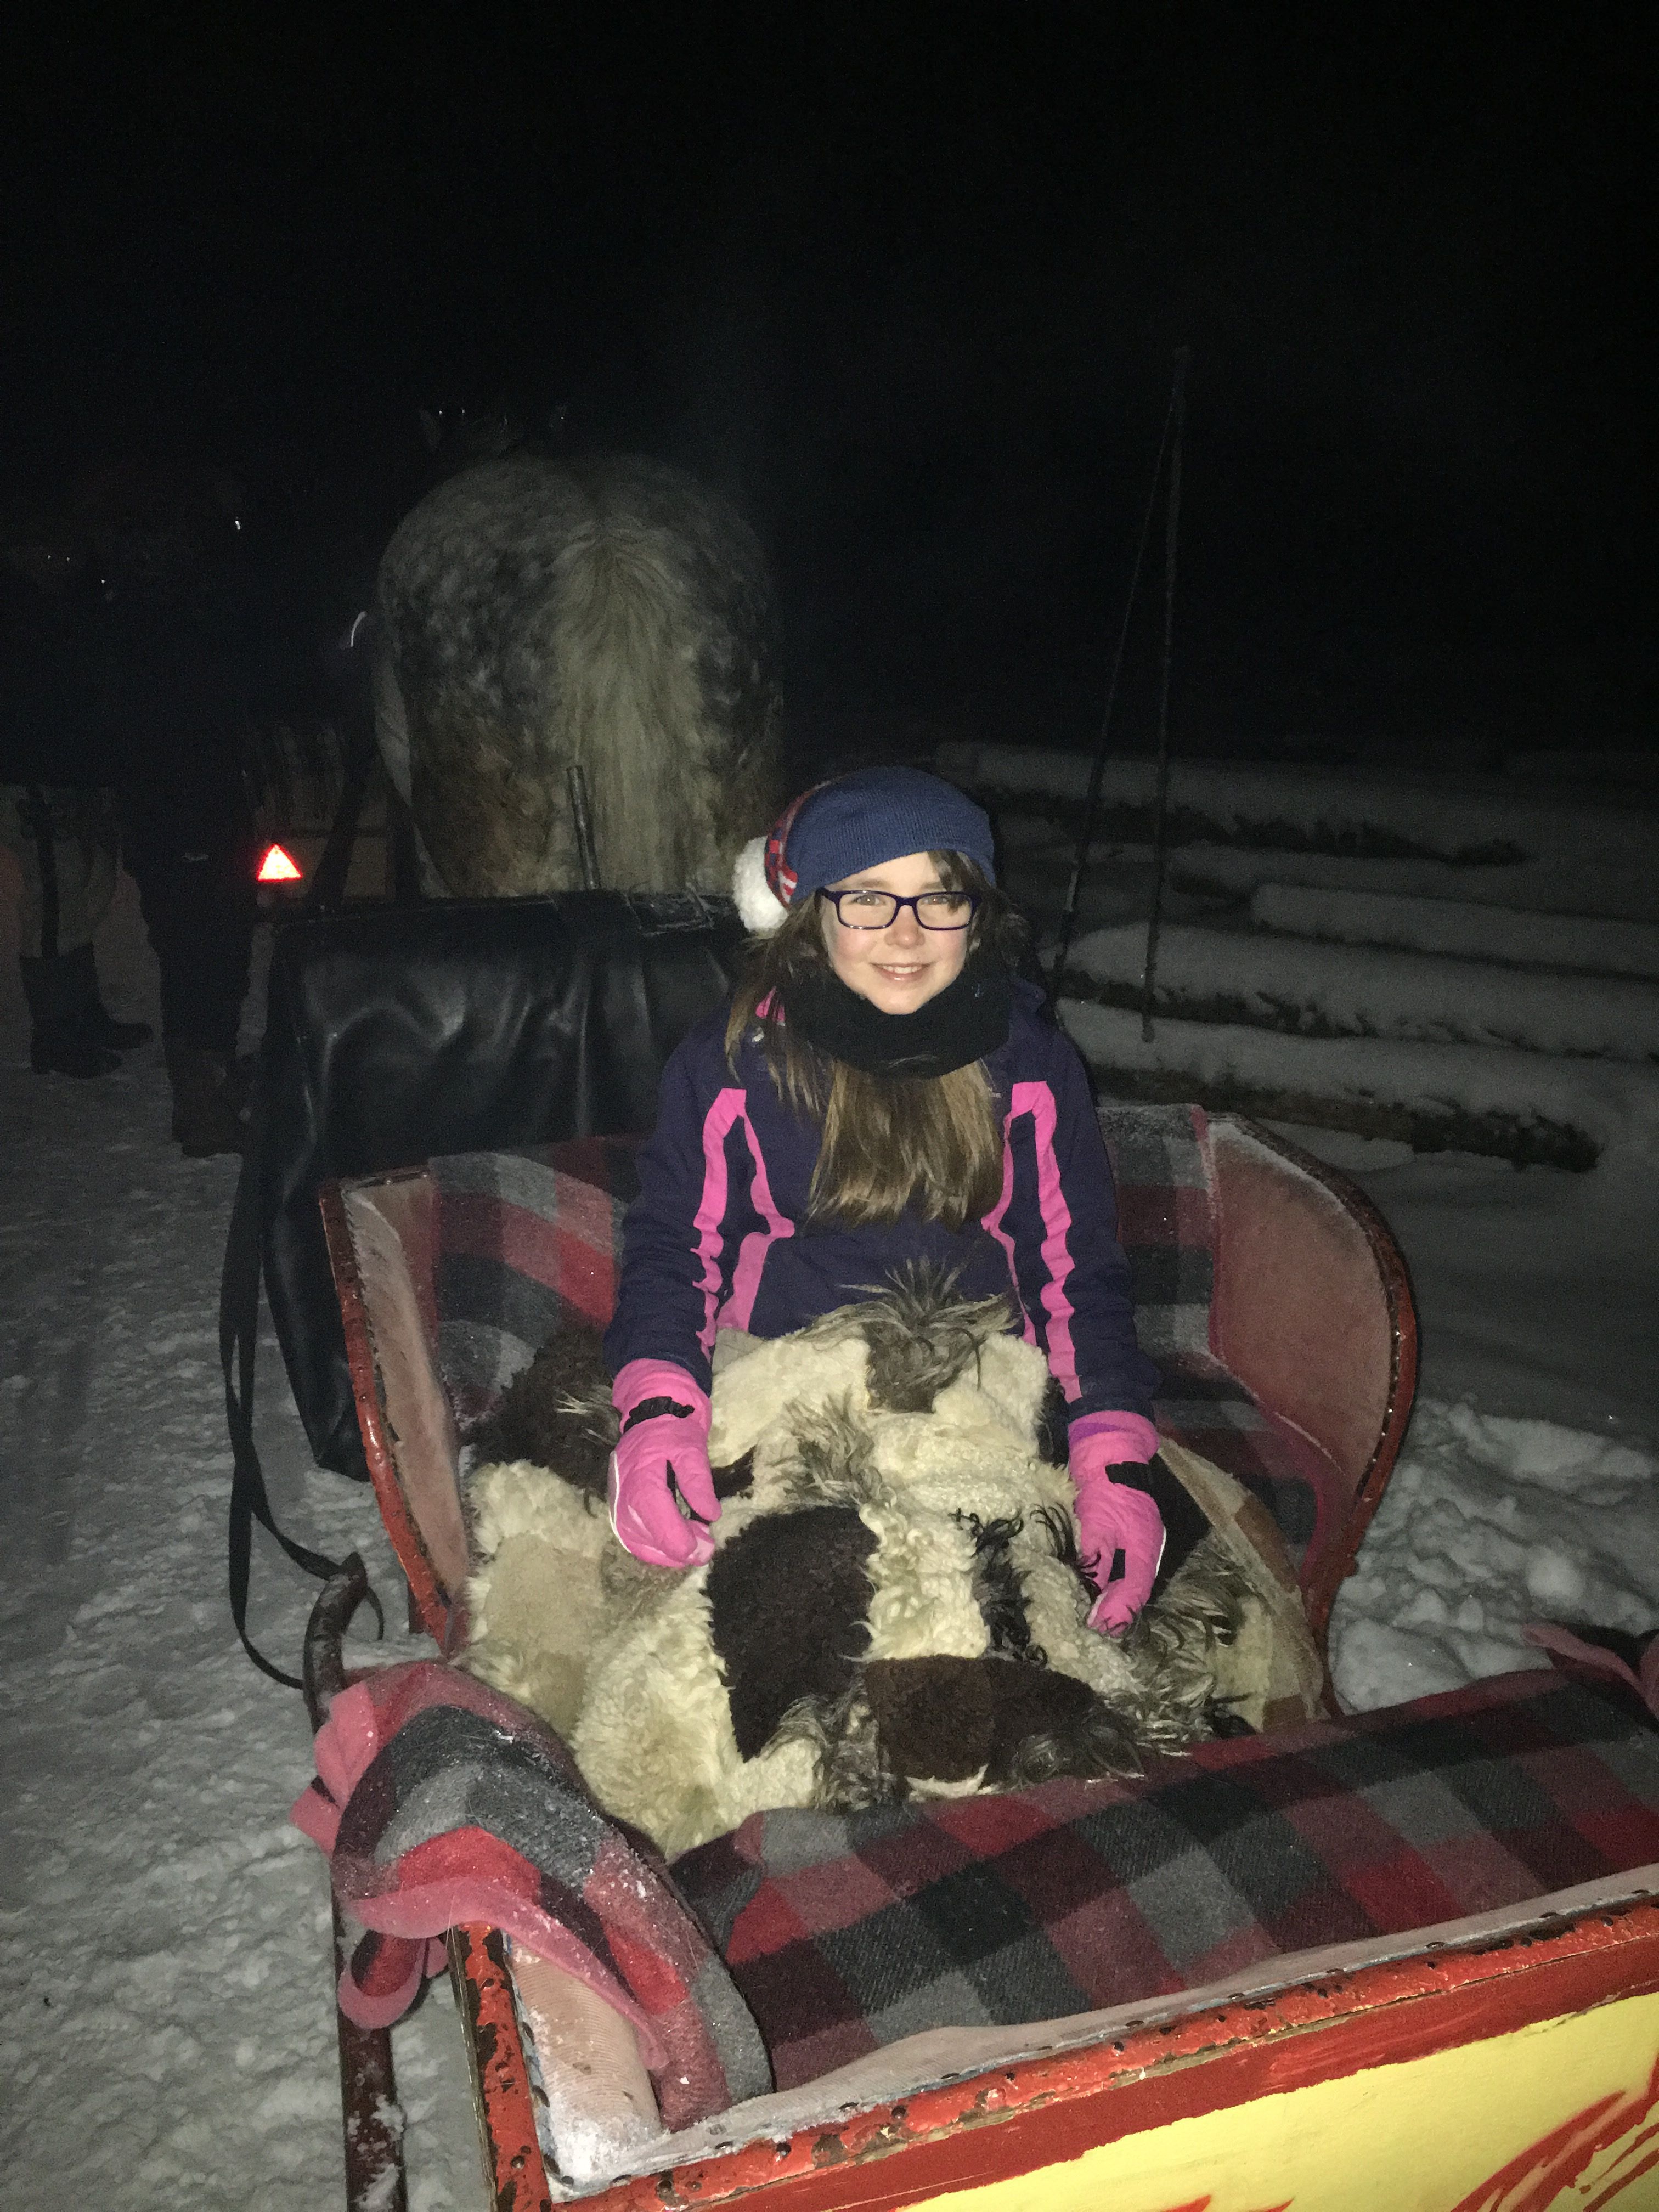 Child enjoying a horse-drawn sleigh ride